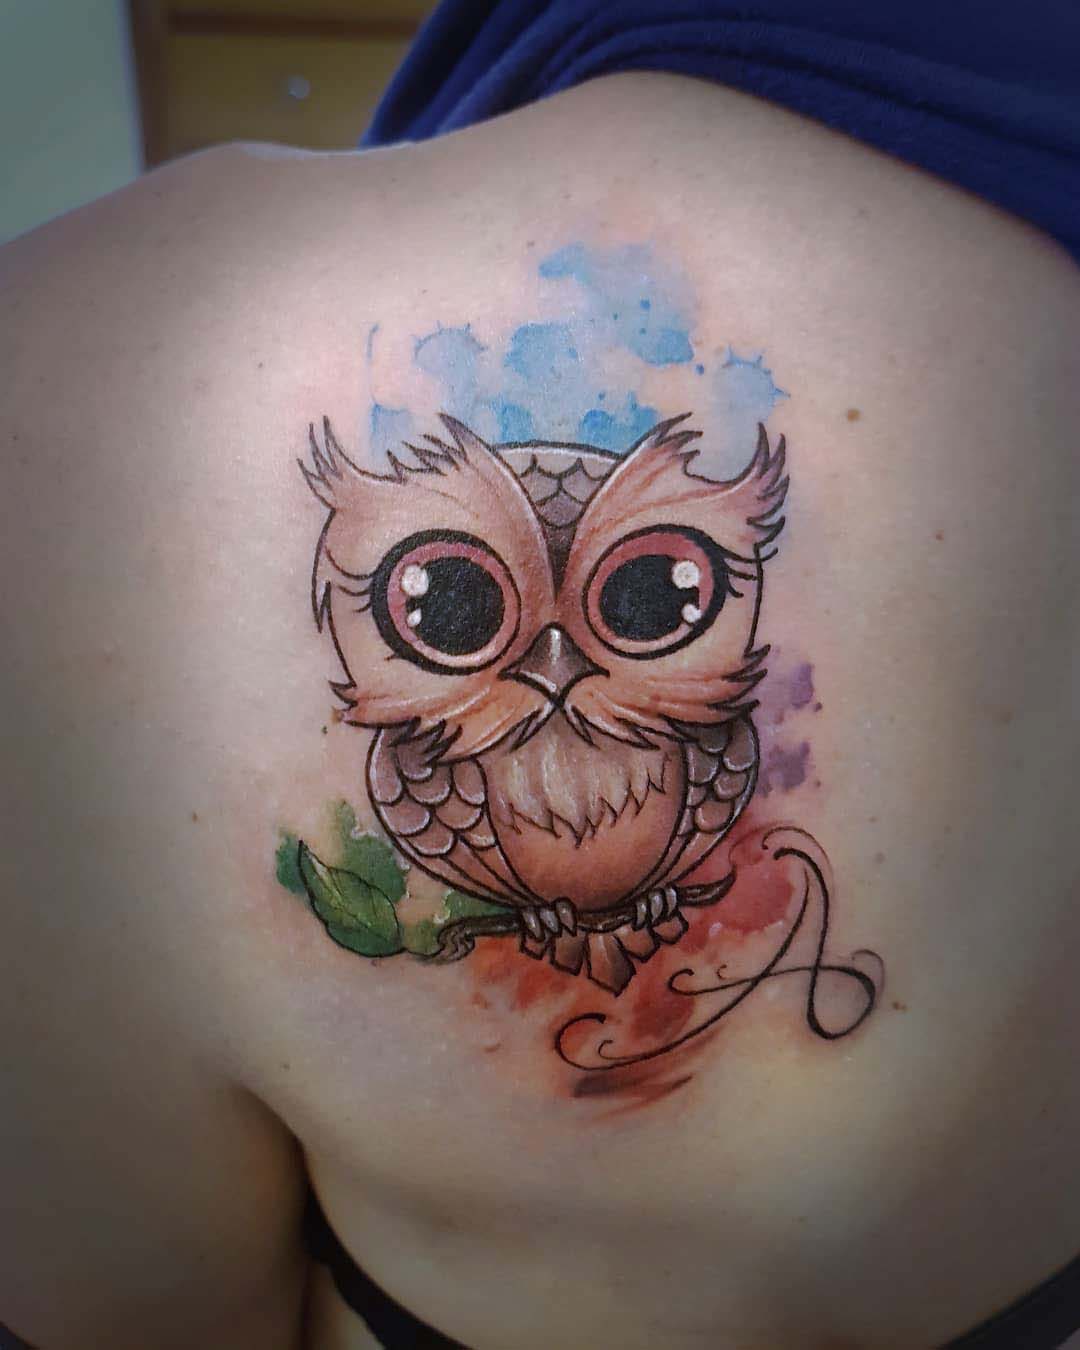 Cute Owl Tattoo on Shoulder Blade - Best Tattoo Ideas Gallery